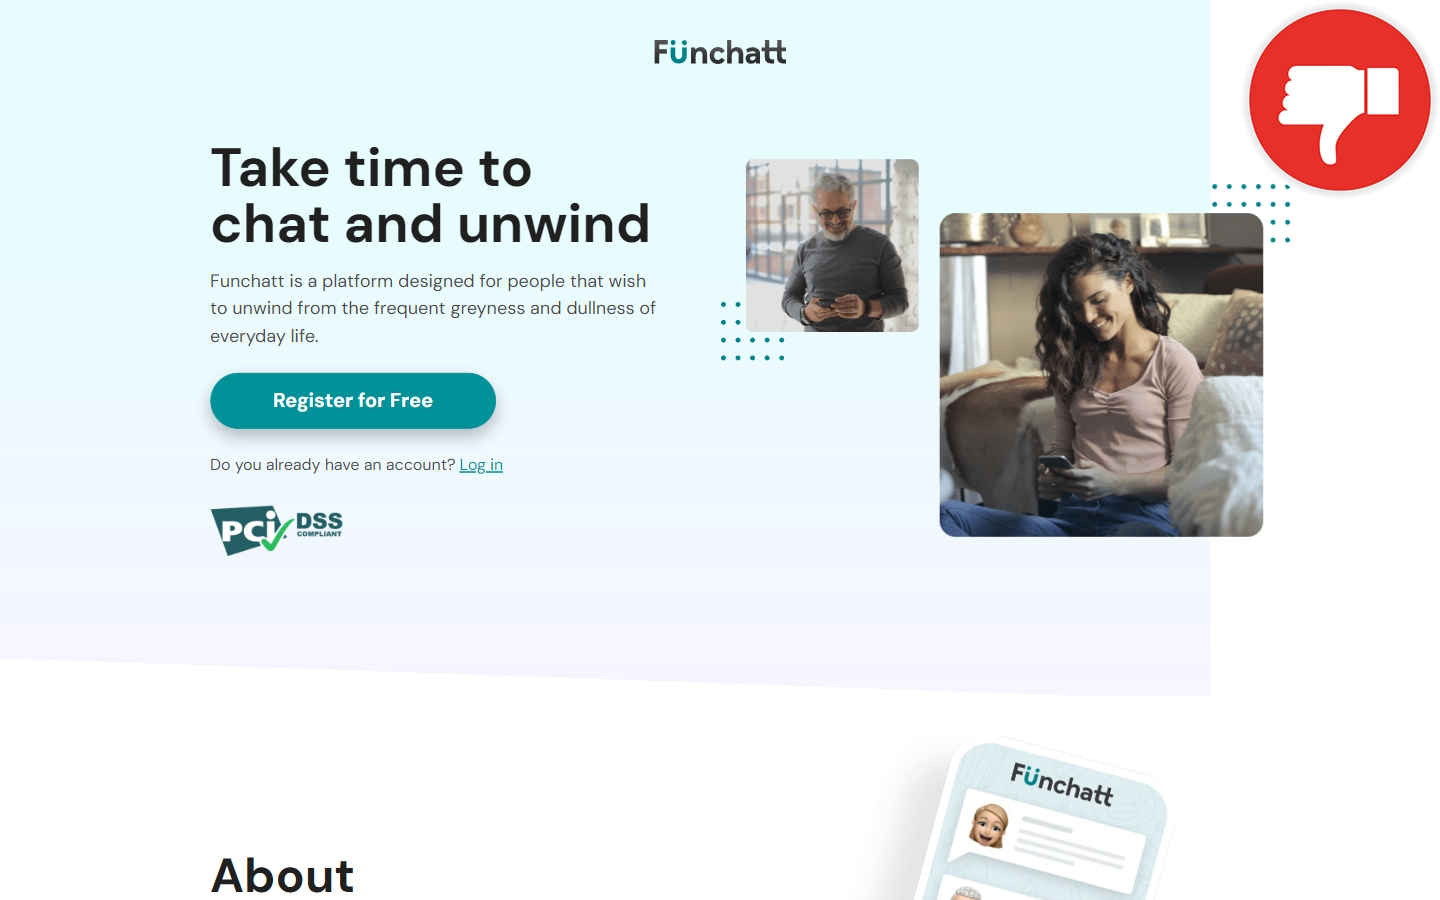 Review FunChatt.com Scam